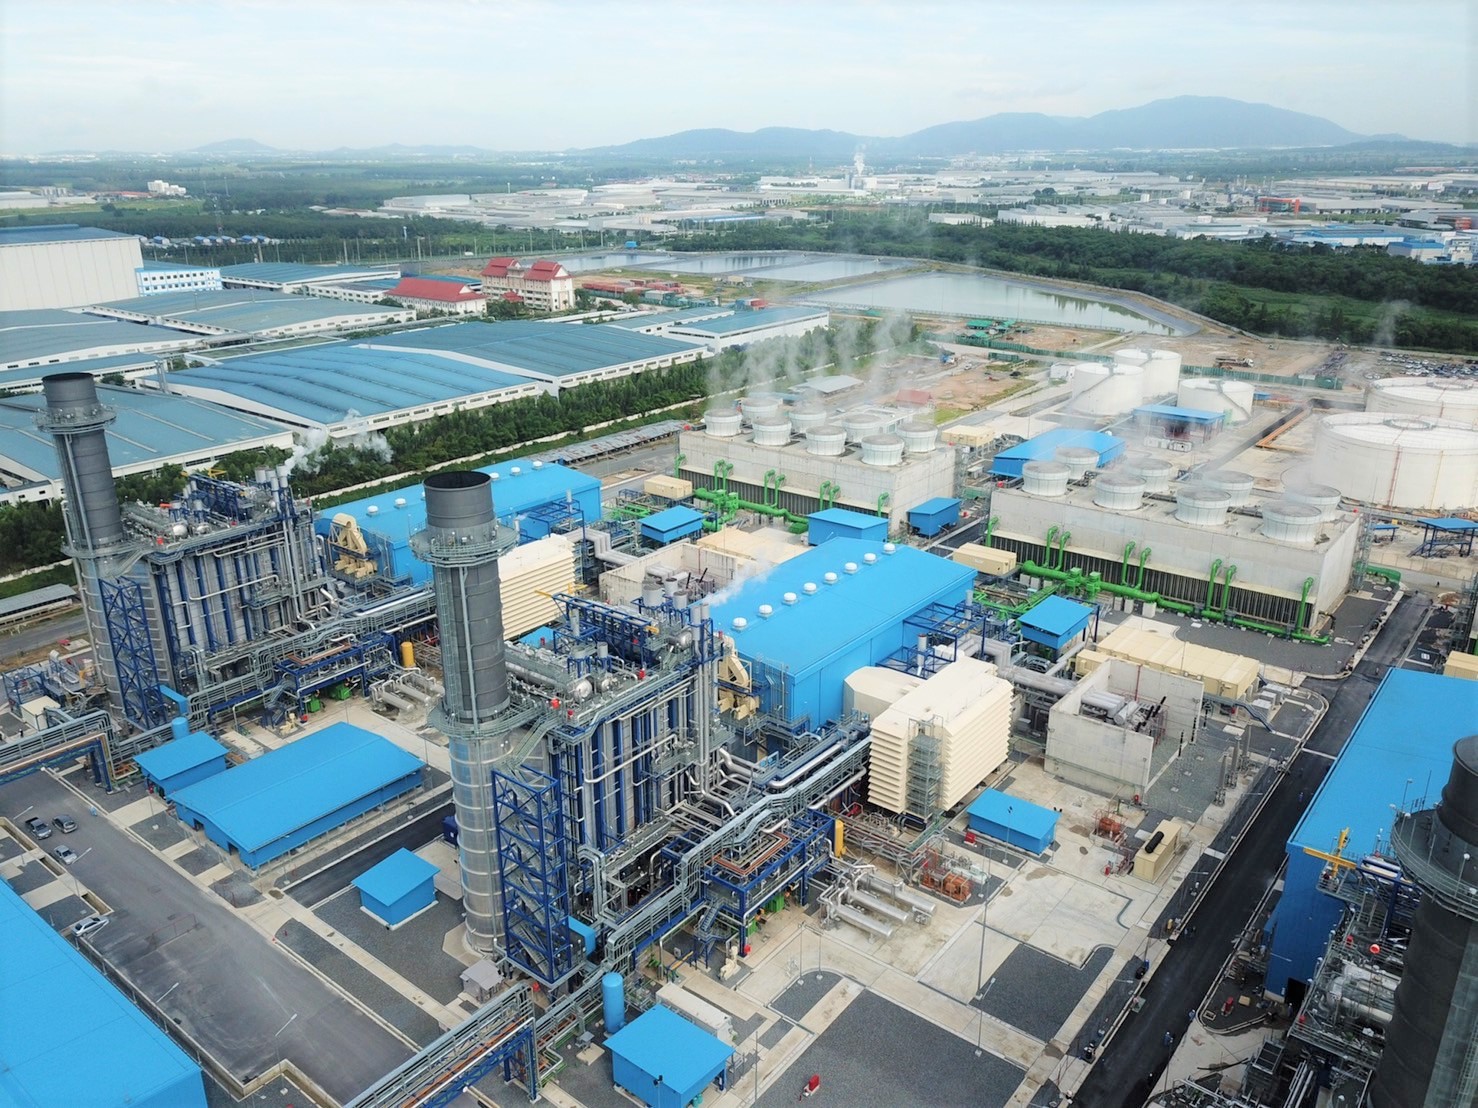 The GTCC Power Plant in Chonburi